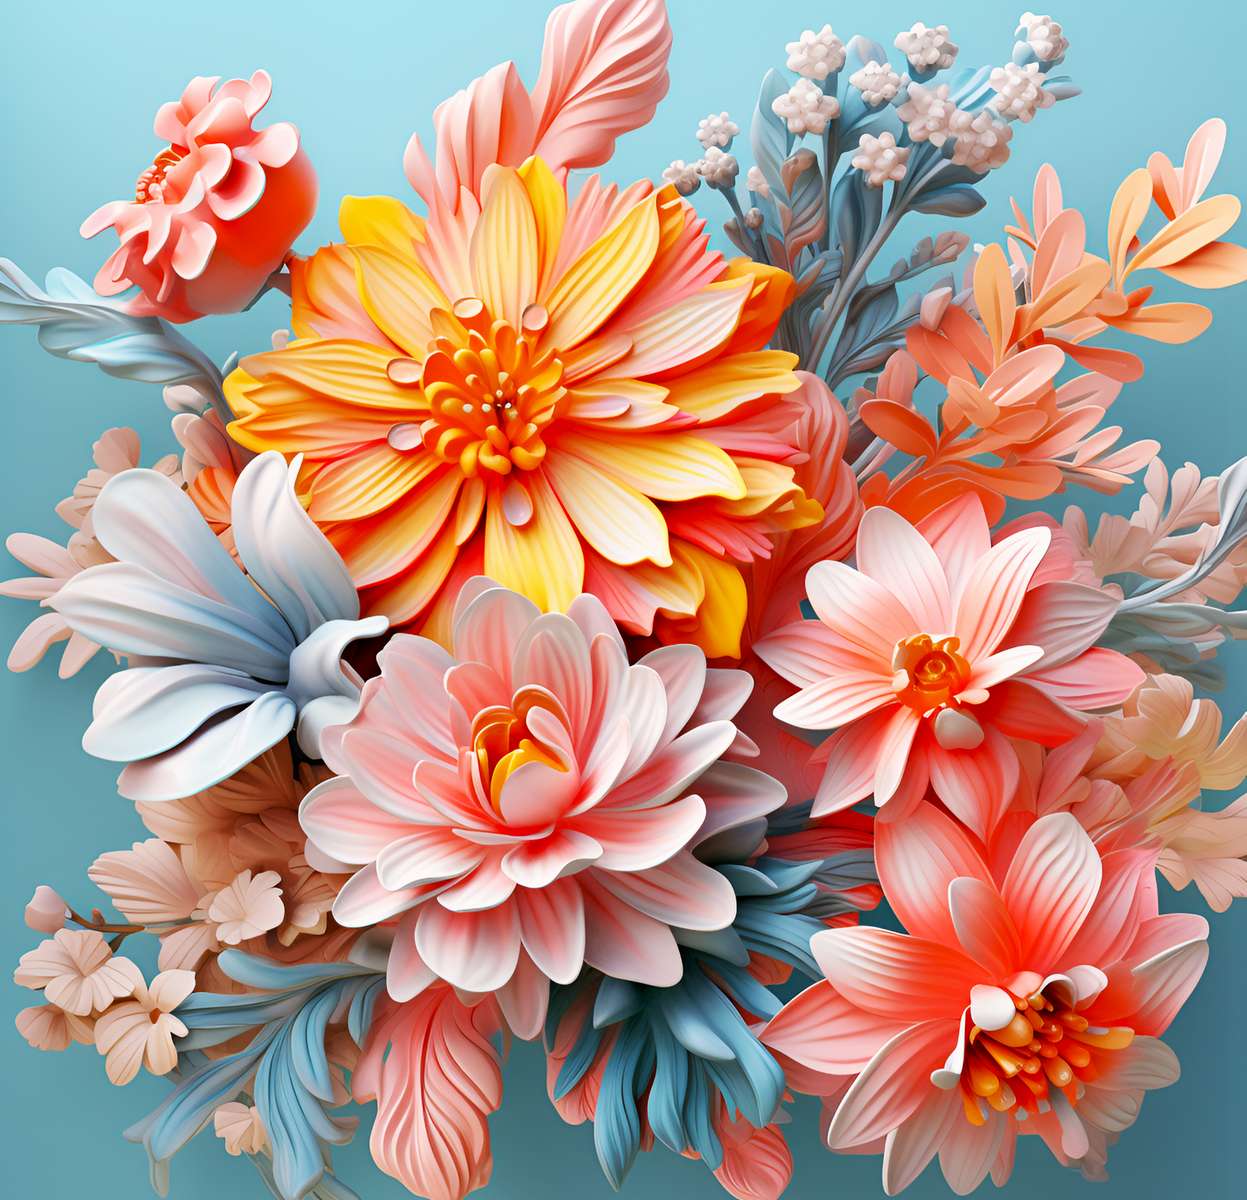 Pastel bouquet of flowers jigsaw puzzle online